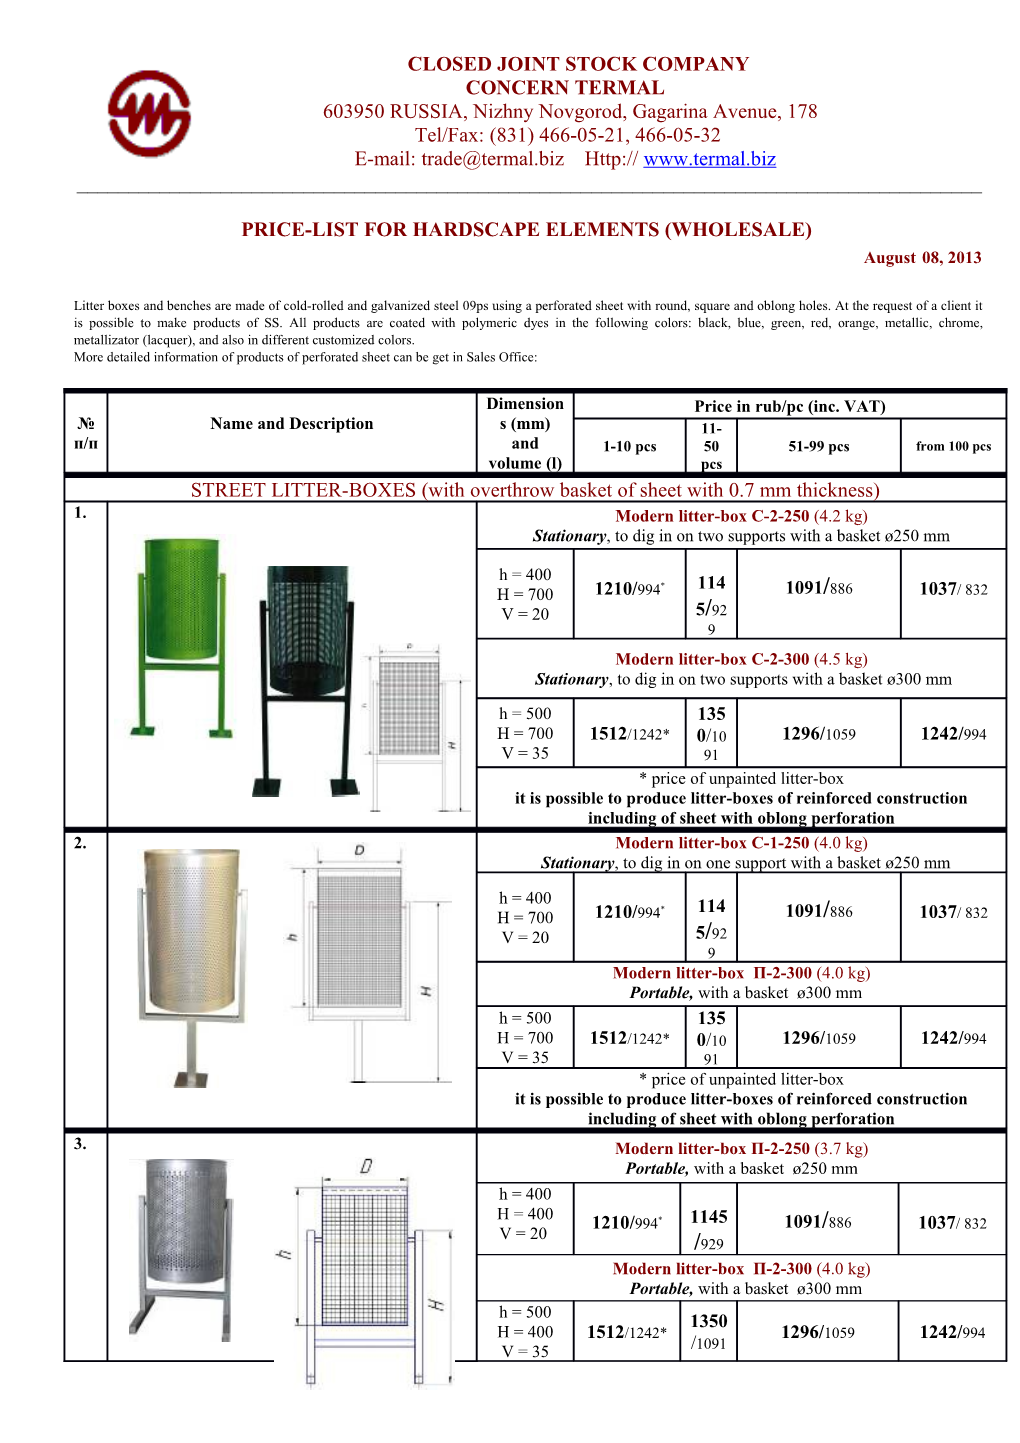 Price-List for Hardscape Elements (Wholesale)